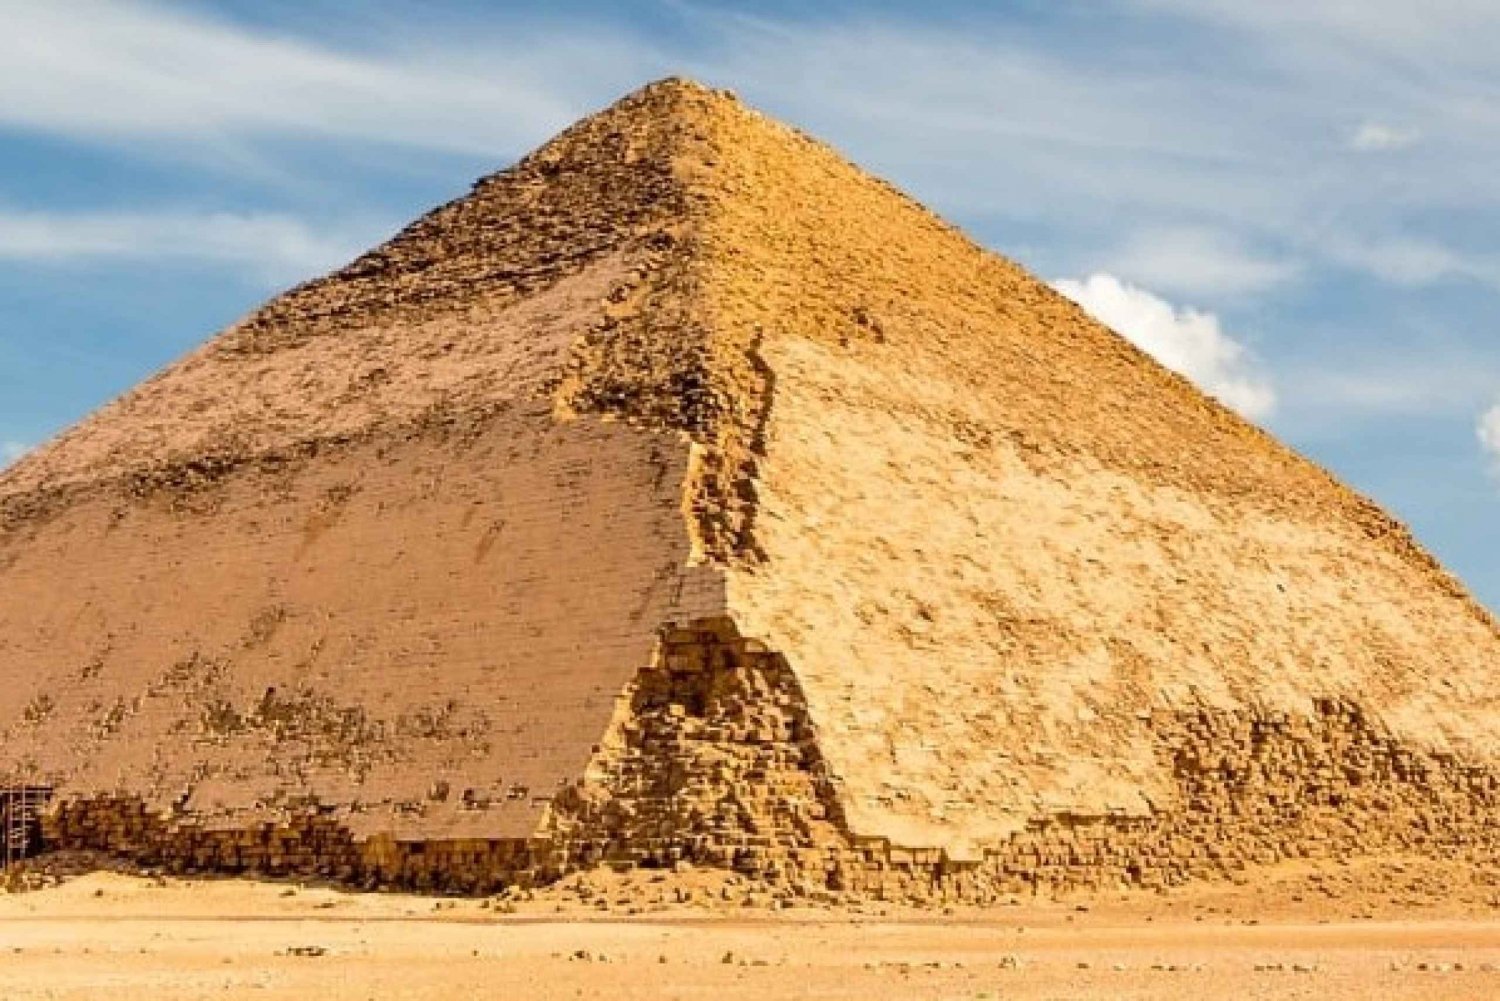 Cairo: Pyramids of Giza, Sphinx, Memphis, Saqqara, Dahshur